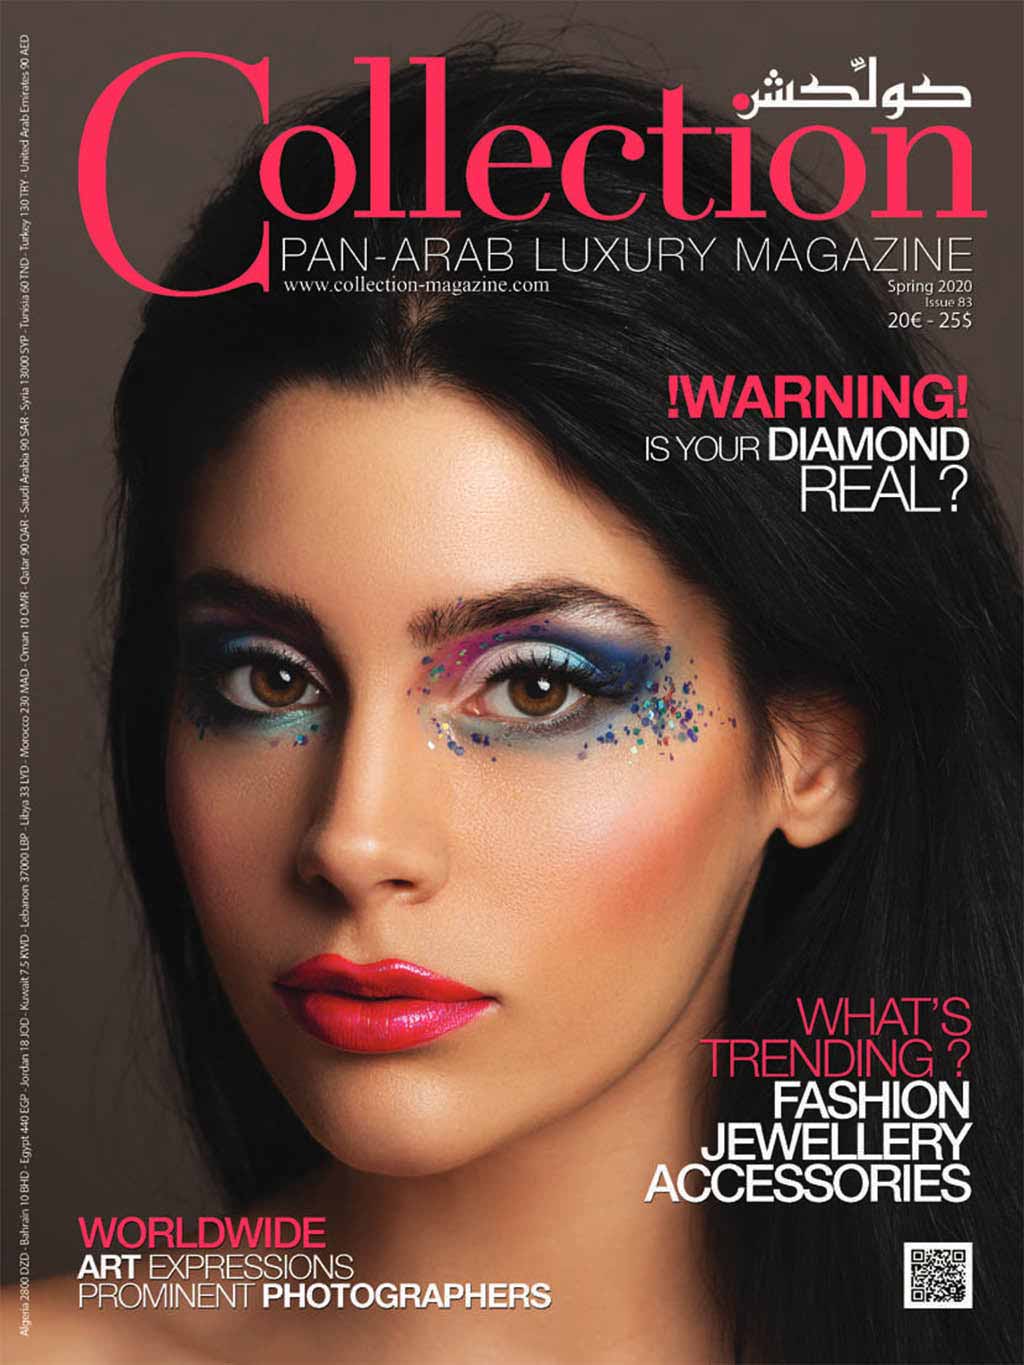 Обложка журнала Collection Pan-Arab Luxury Magazin, весна 2020